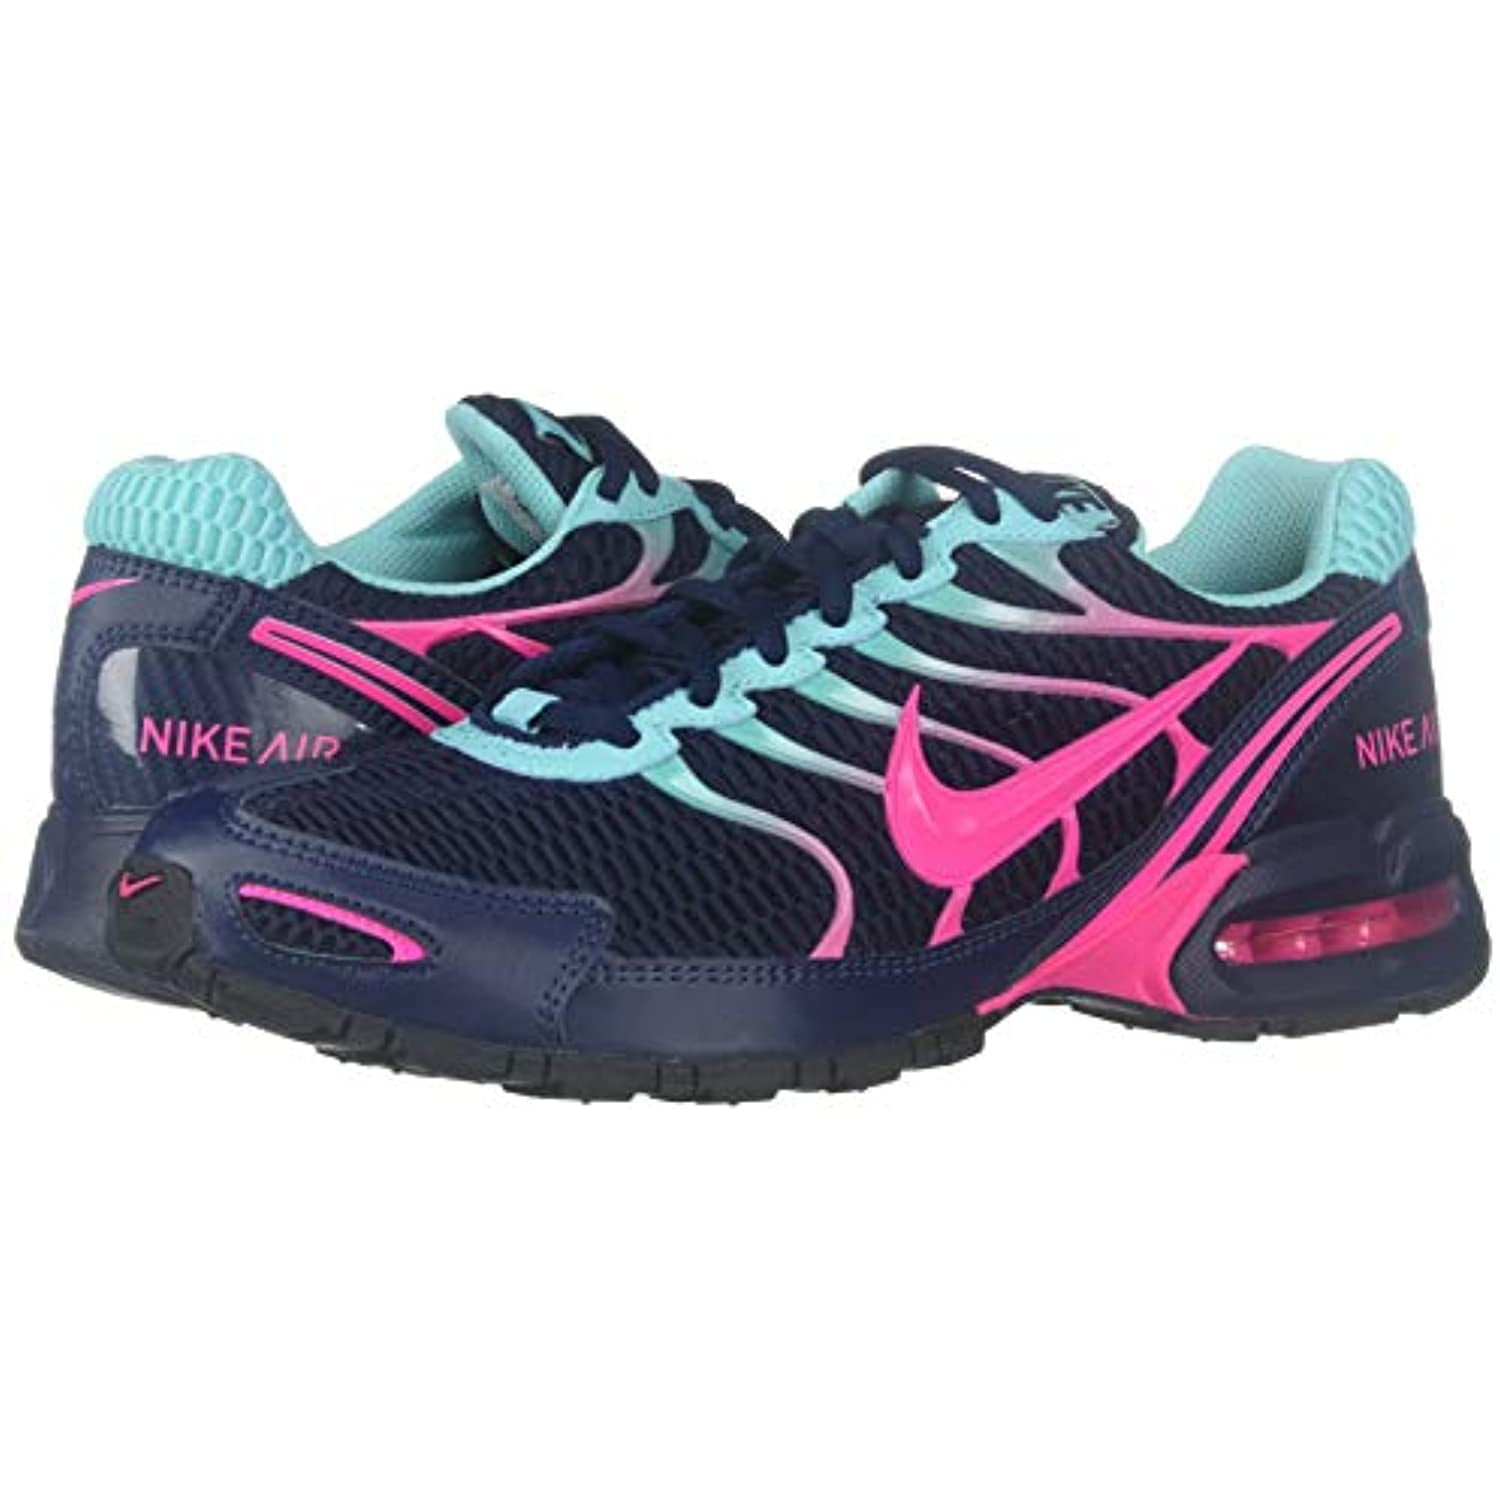 Nike Women's Air Max 4 Running Shoe (5.5, Midnight Blast) - Walmart.com